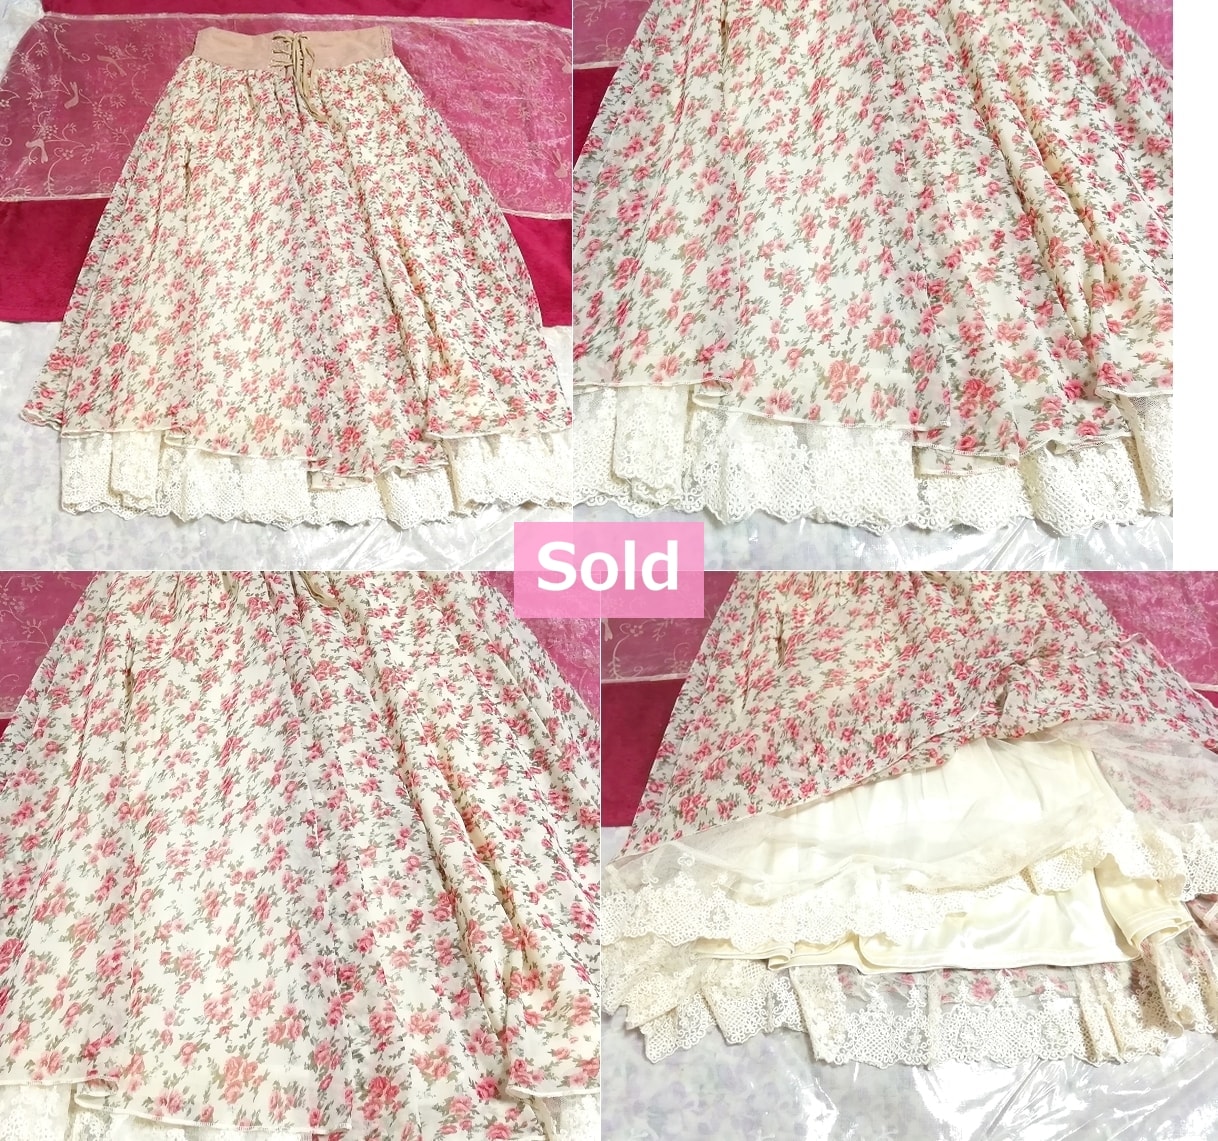 Pink floral girly chiffon lace skirt Pink floral girly chiffon lace skirt